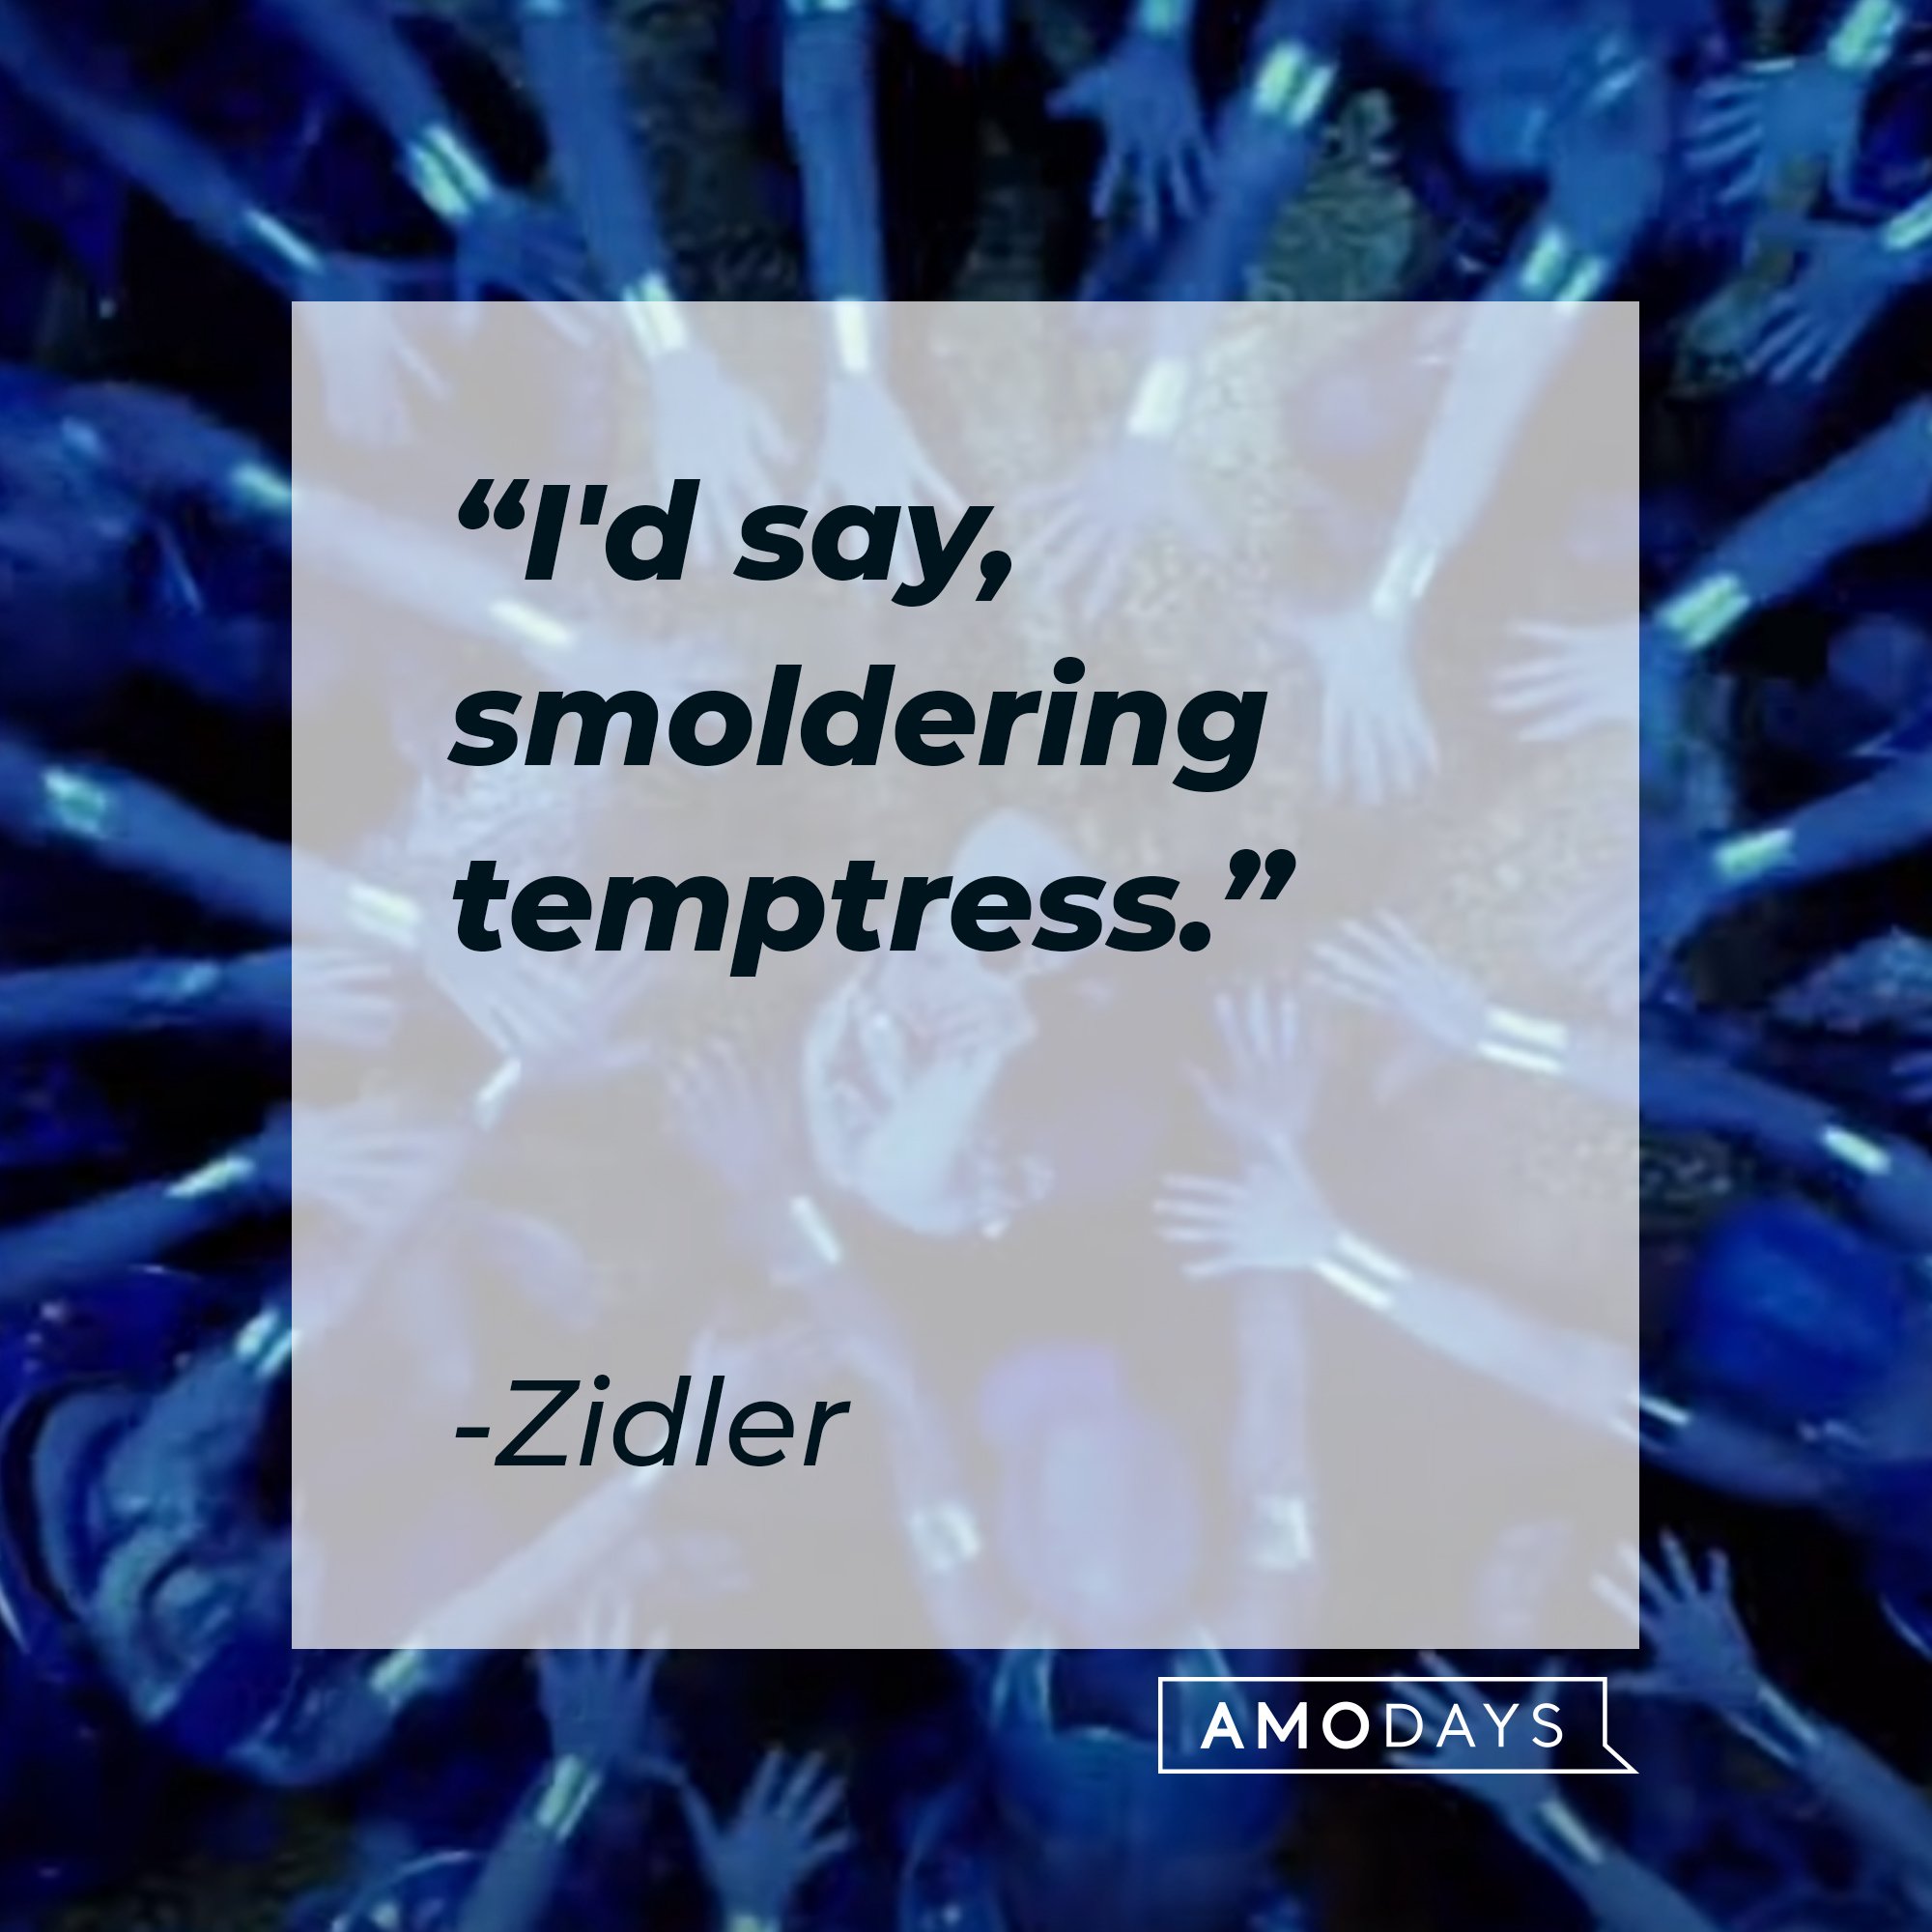 Zidler's quote: "I'd say, smoldering temptress." | Image: AmoDays